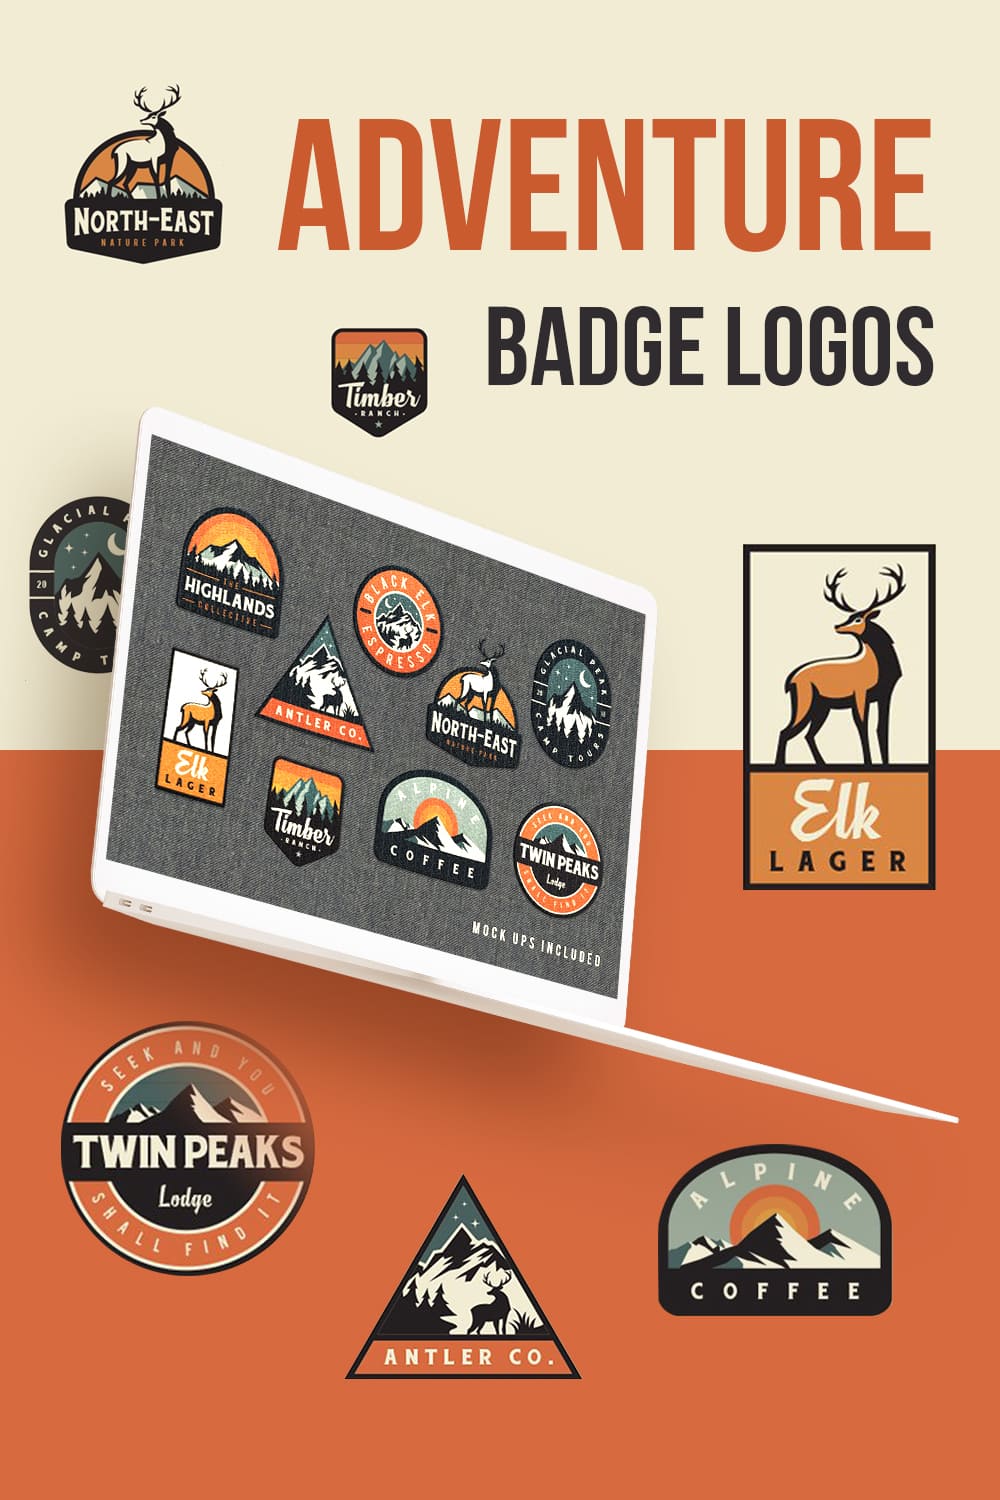 adventure badge logos pinterest image.